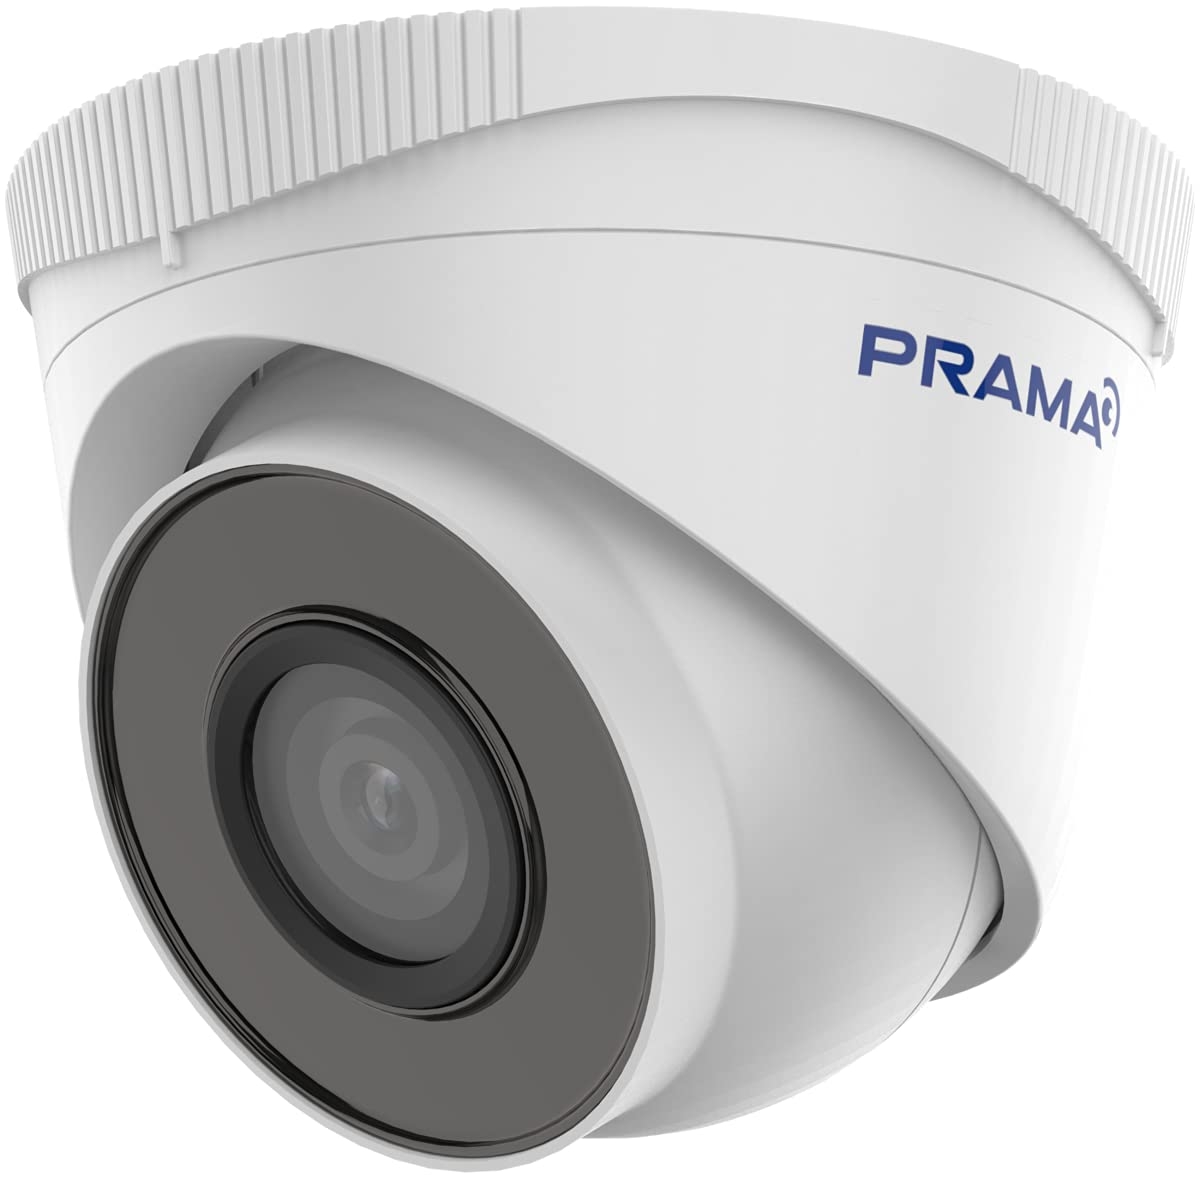 HIKVISION PRAMA PT-NC123D3-I 2 MP IR Fixed Network Turret Camera